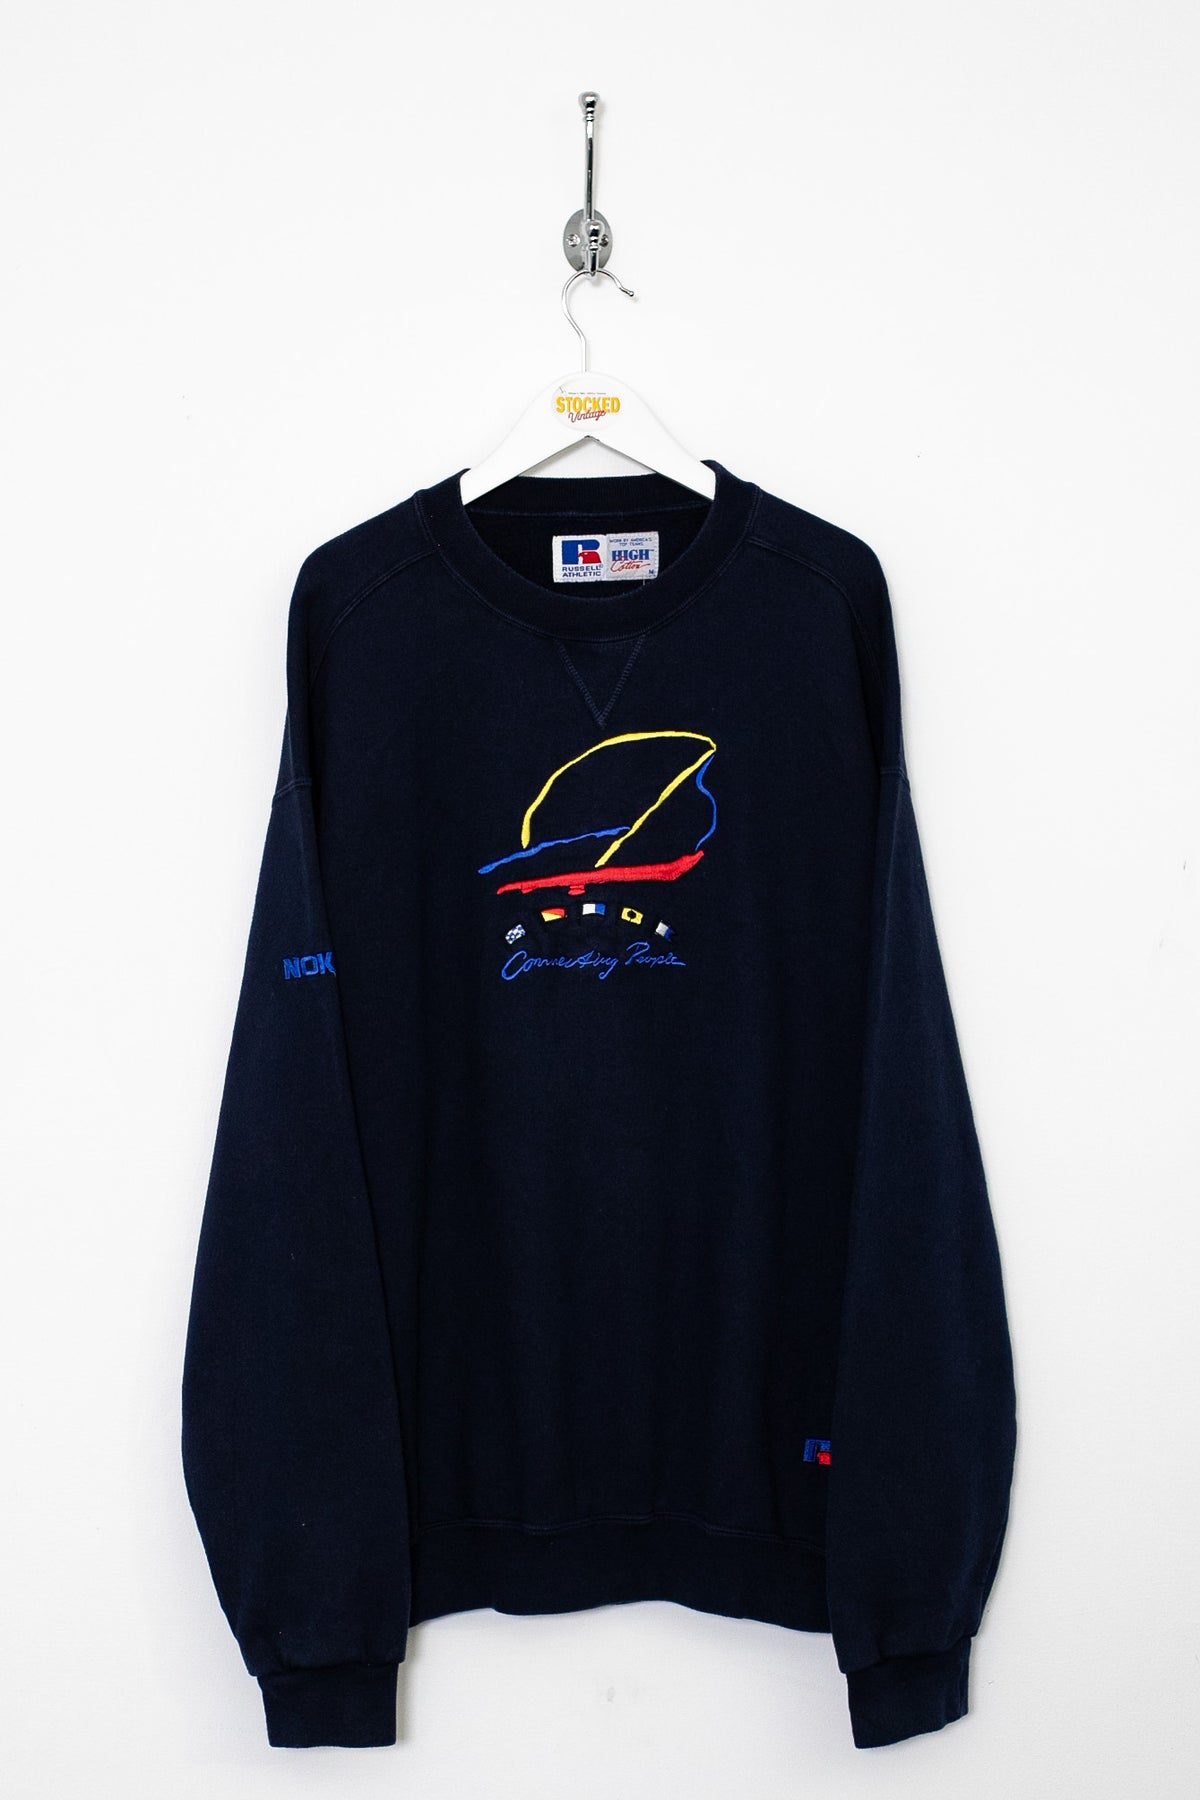 90s Russell Athletic Nokia Sweatshirt (M)